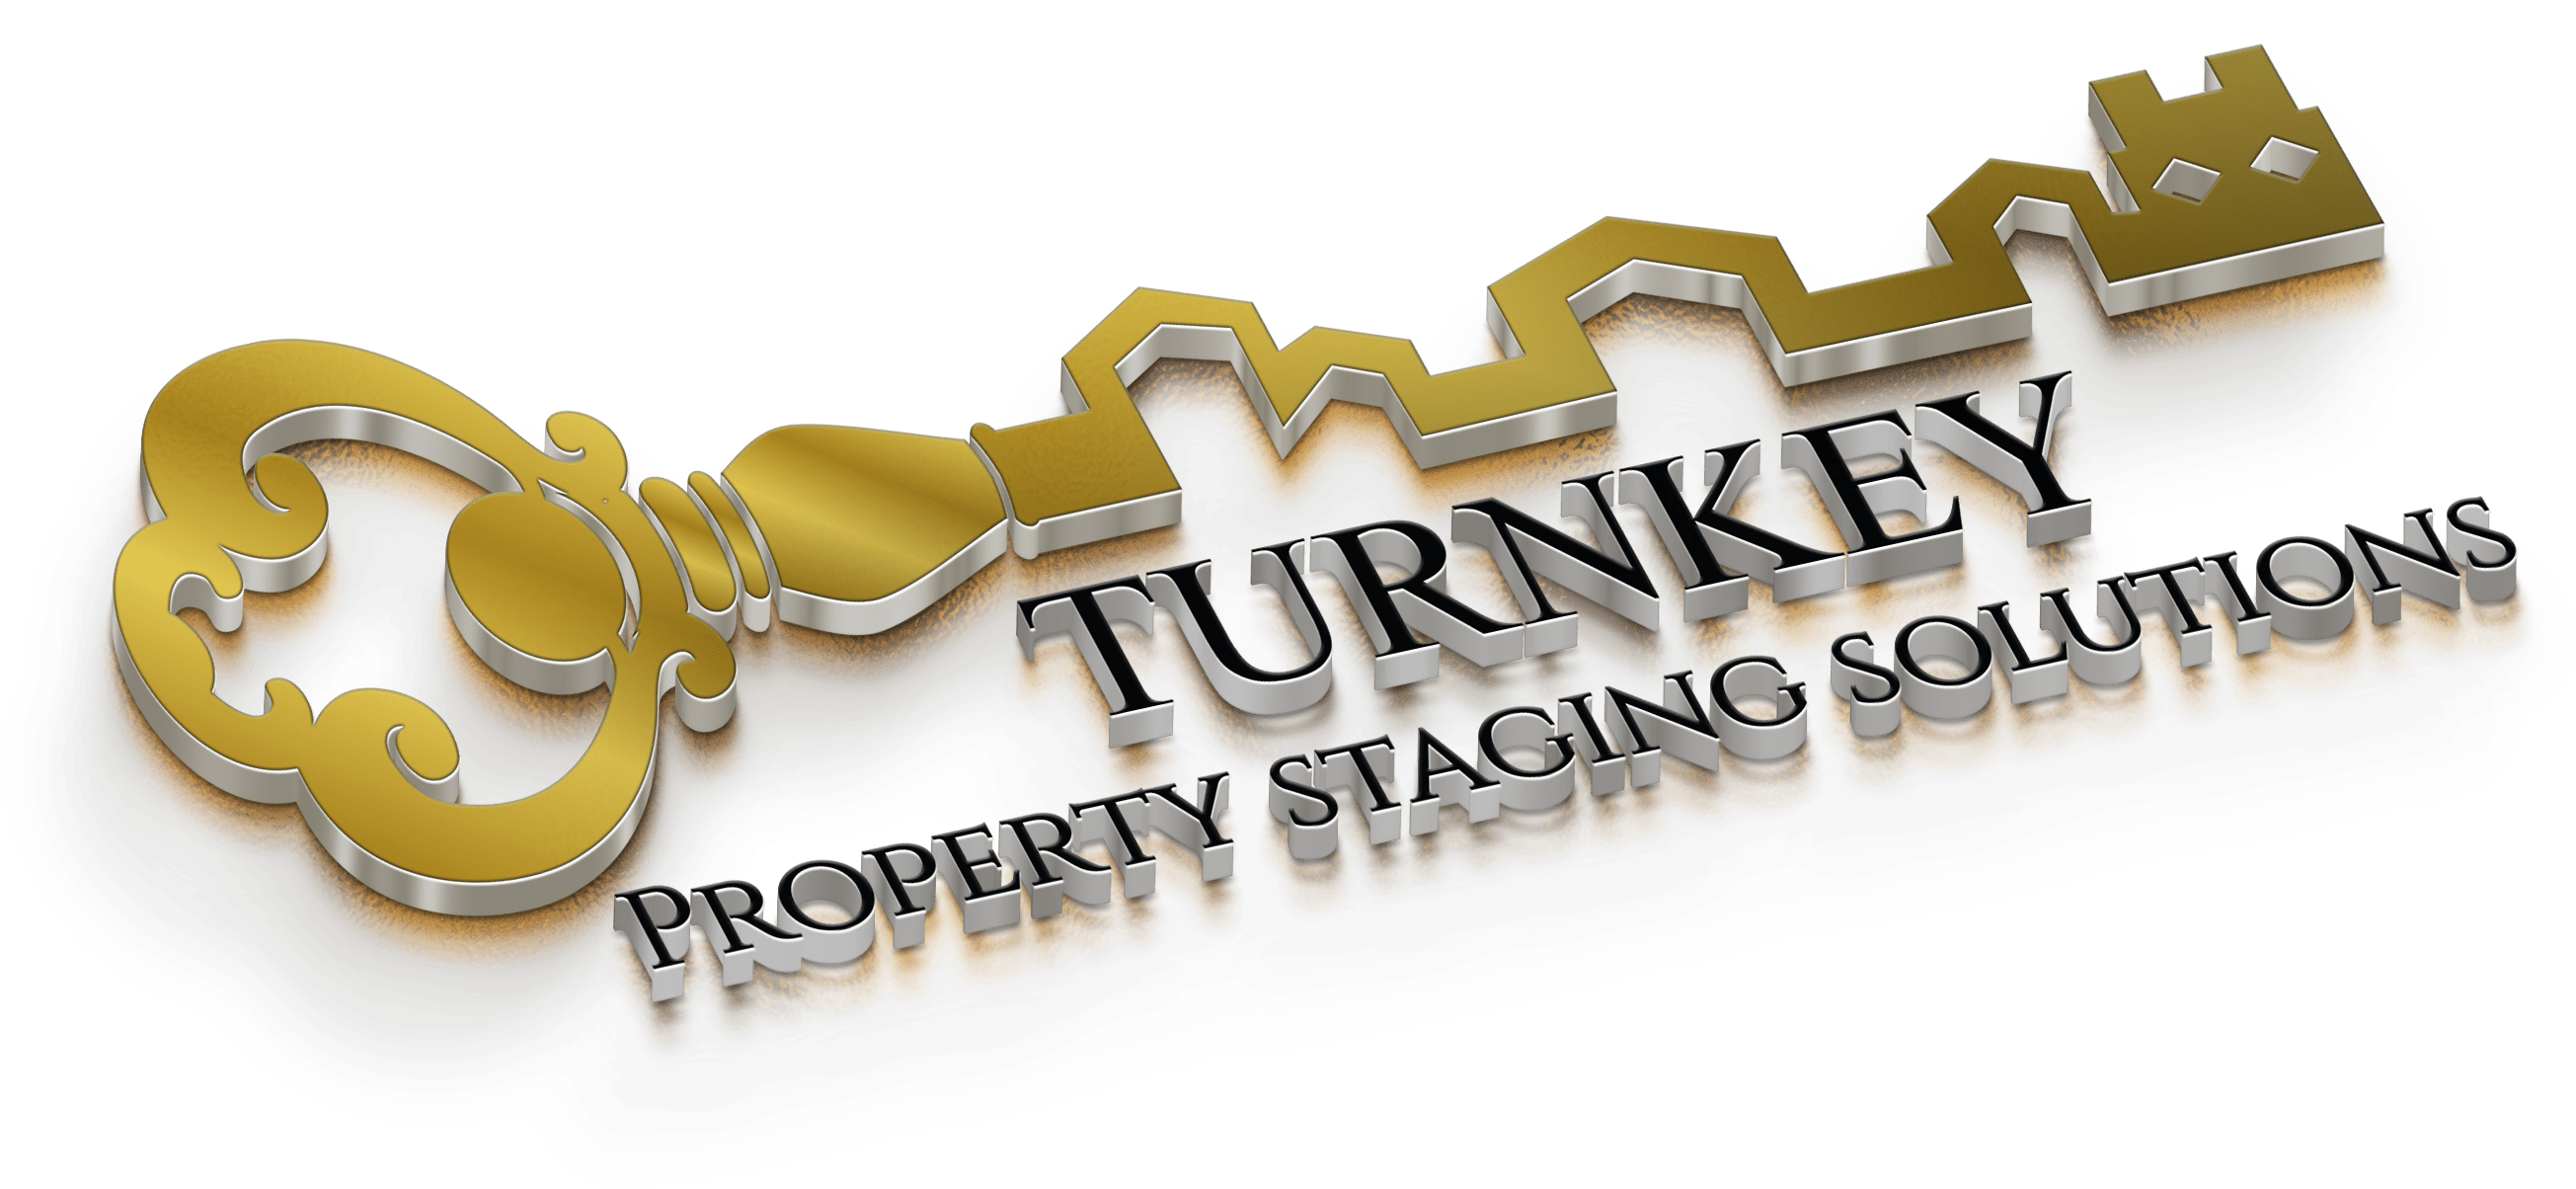 Turnkey Property Staging